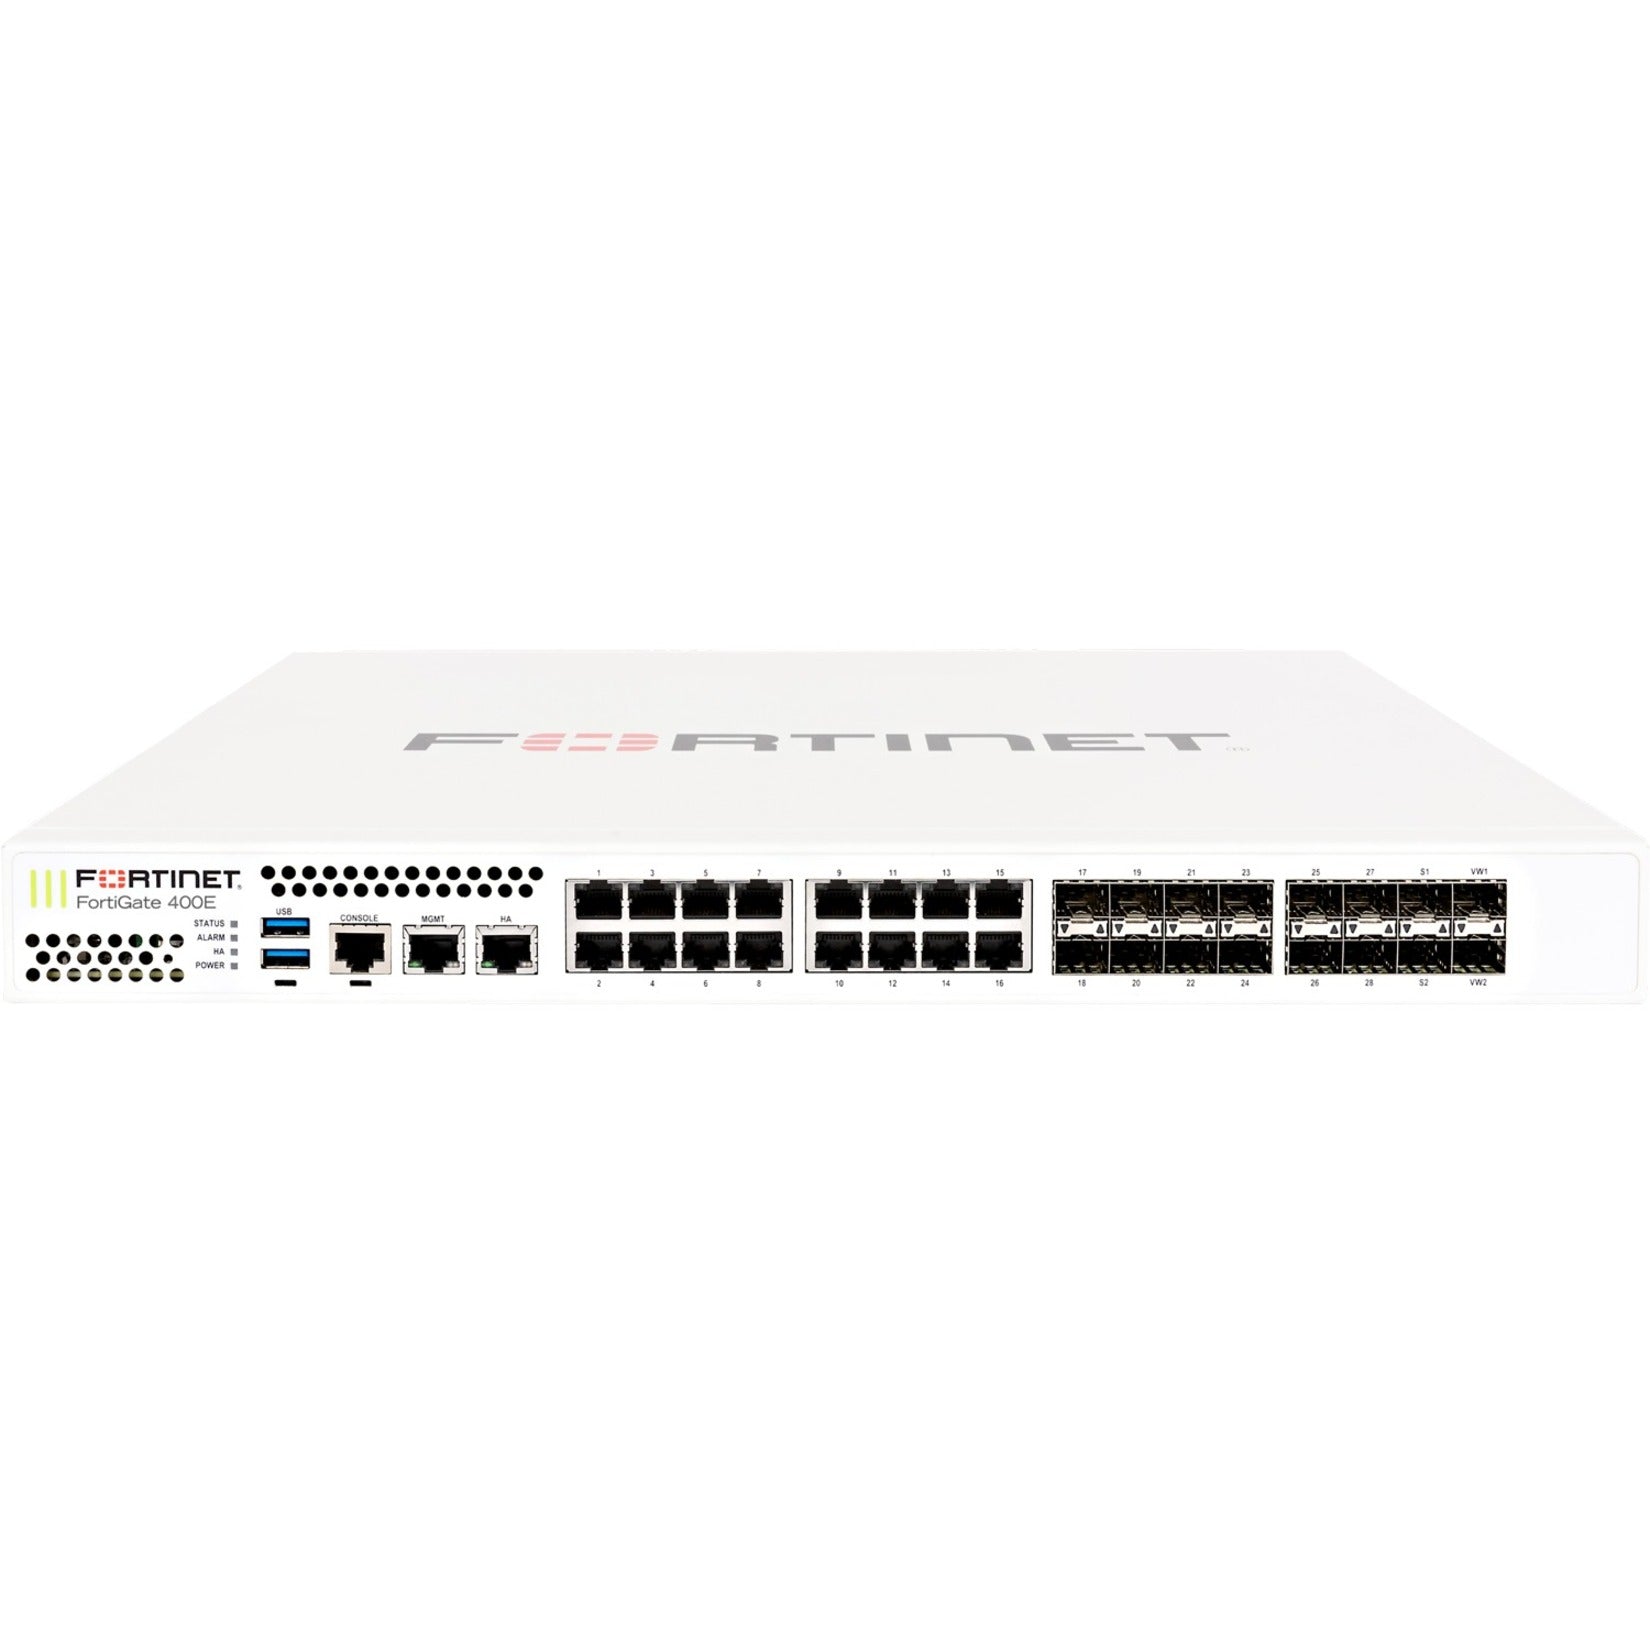 Fortinet FG-400E-BYPASS-LENC FortiGate FG-400E Network Security/Firewall Appliance, 16 SFP Slots, 18 Ports, AES (256-bit), Gigabit Ethernet, 1U Rack-mountable